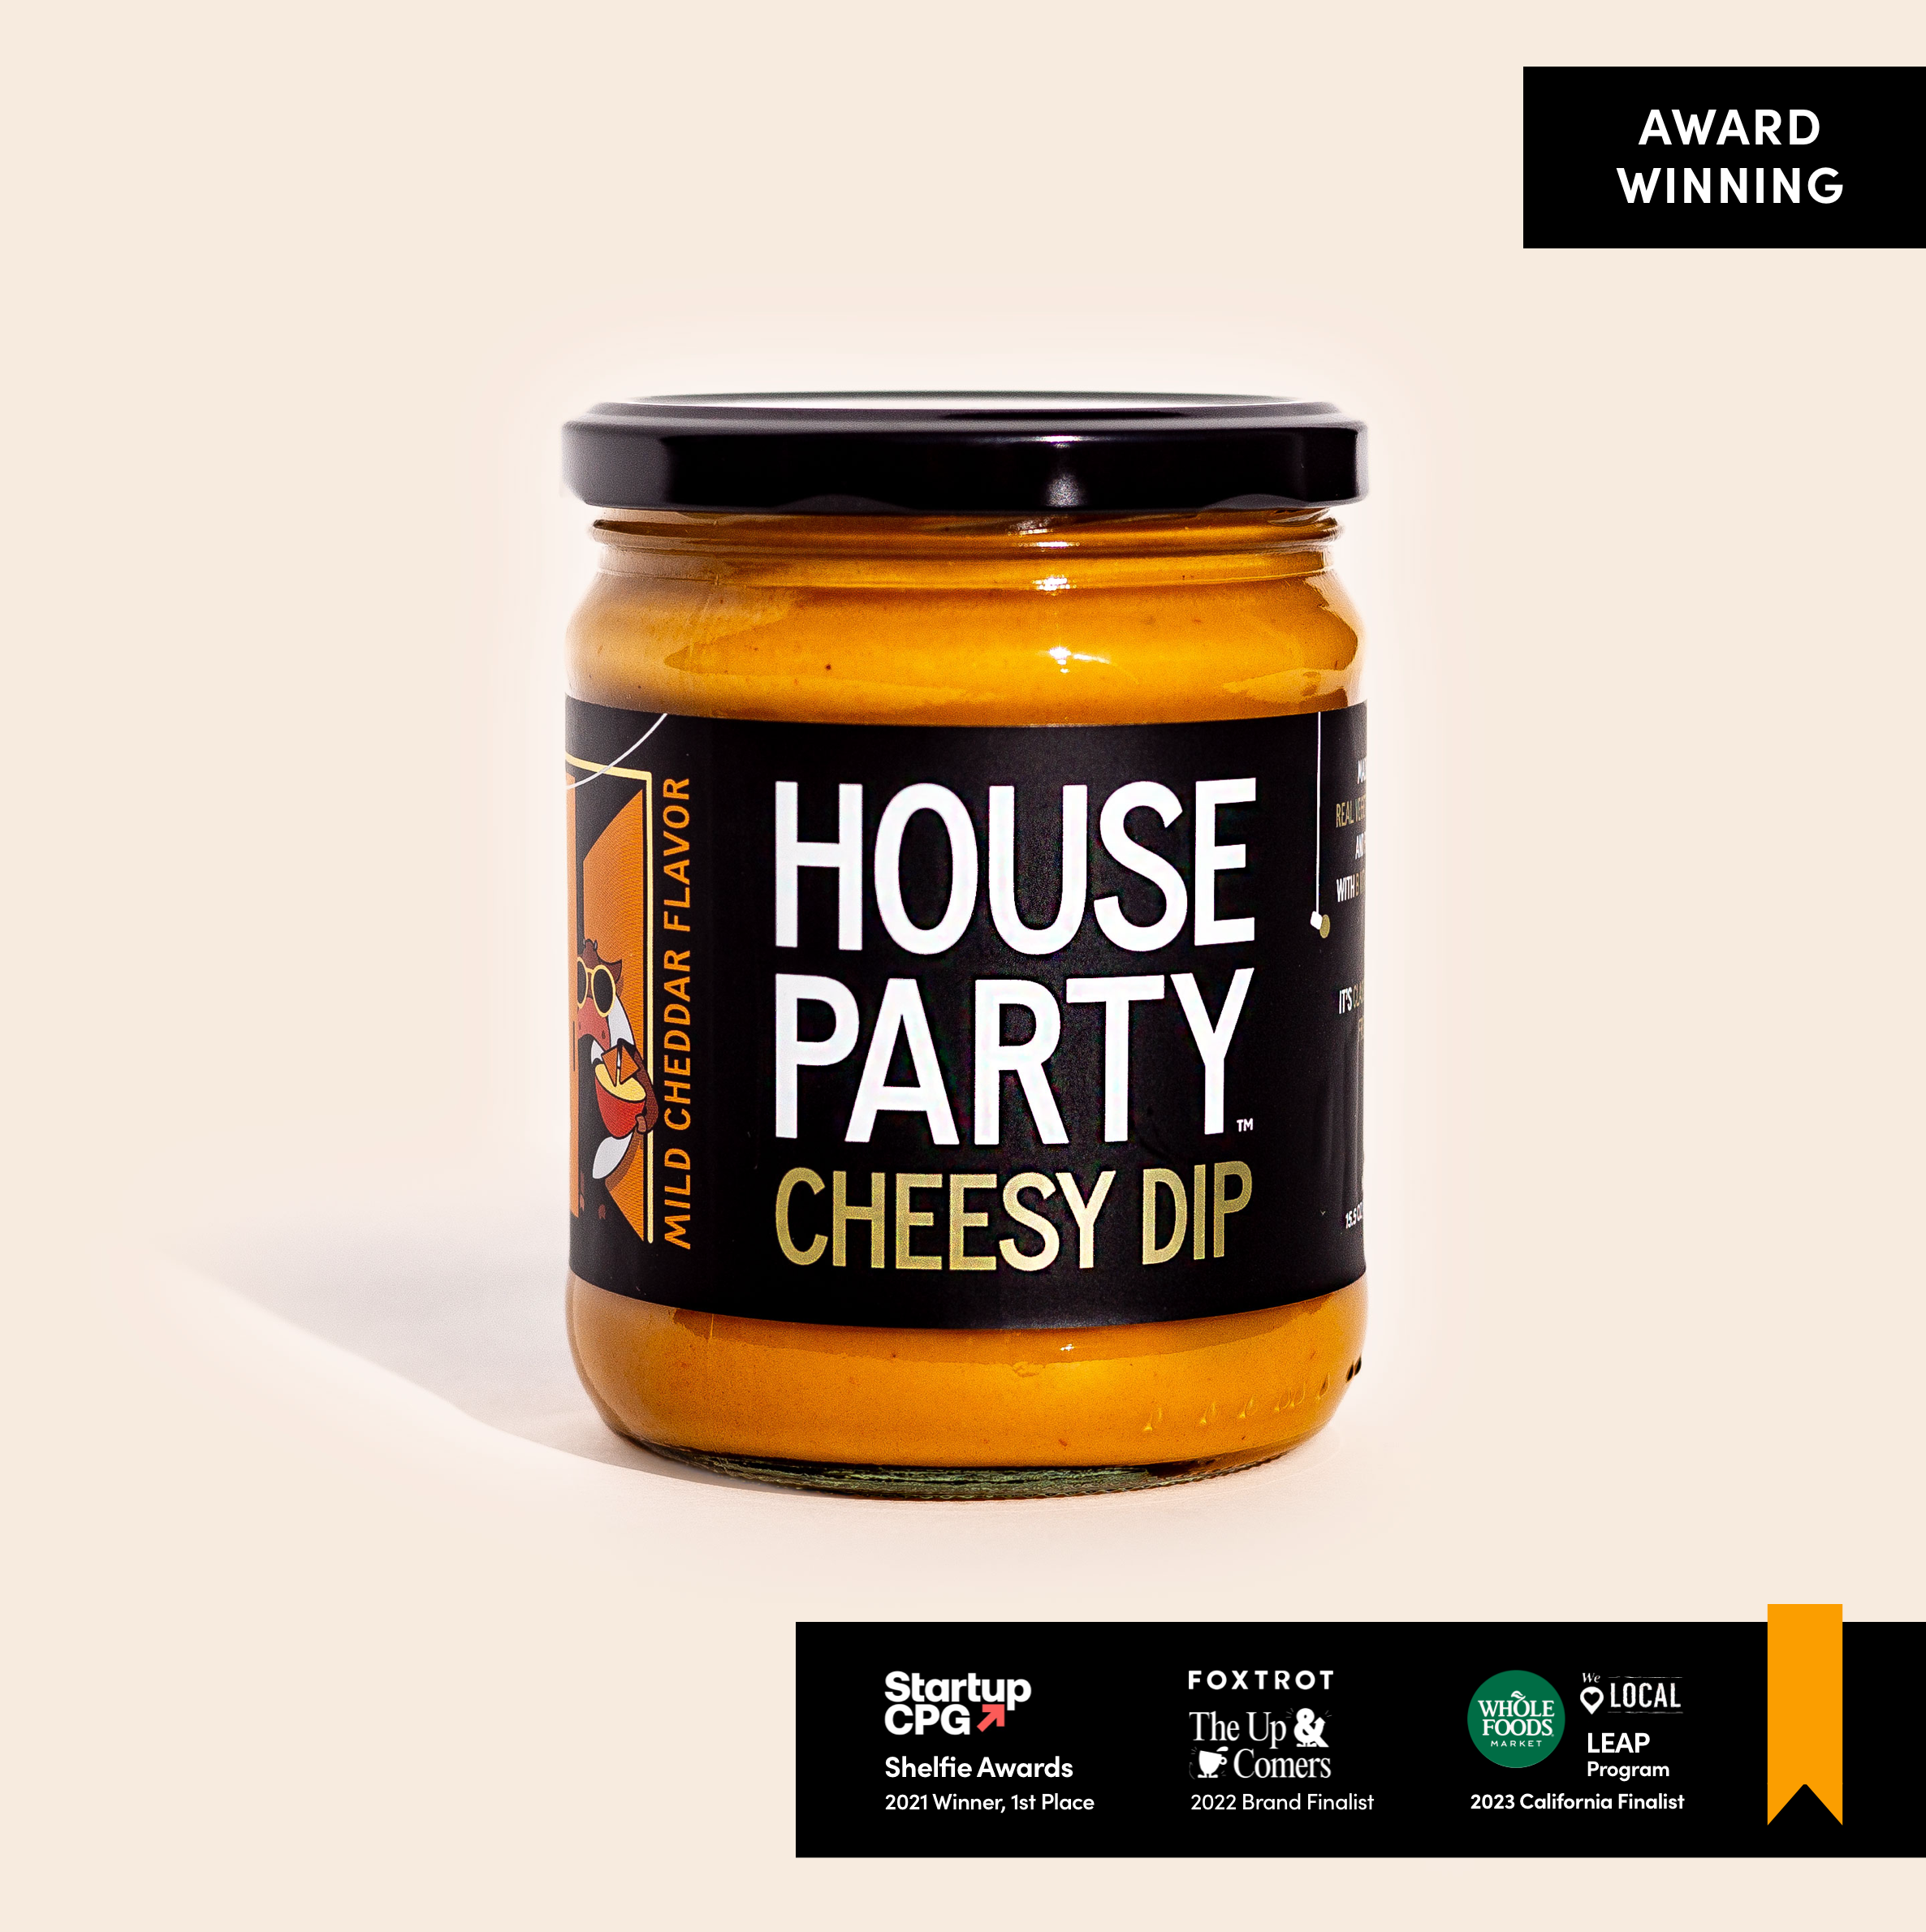 Single Jar Mild Cheddar Cheesy Dips Award Winning 